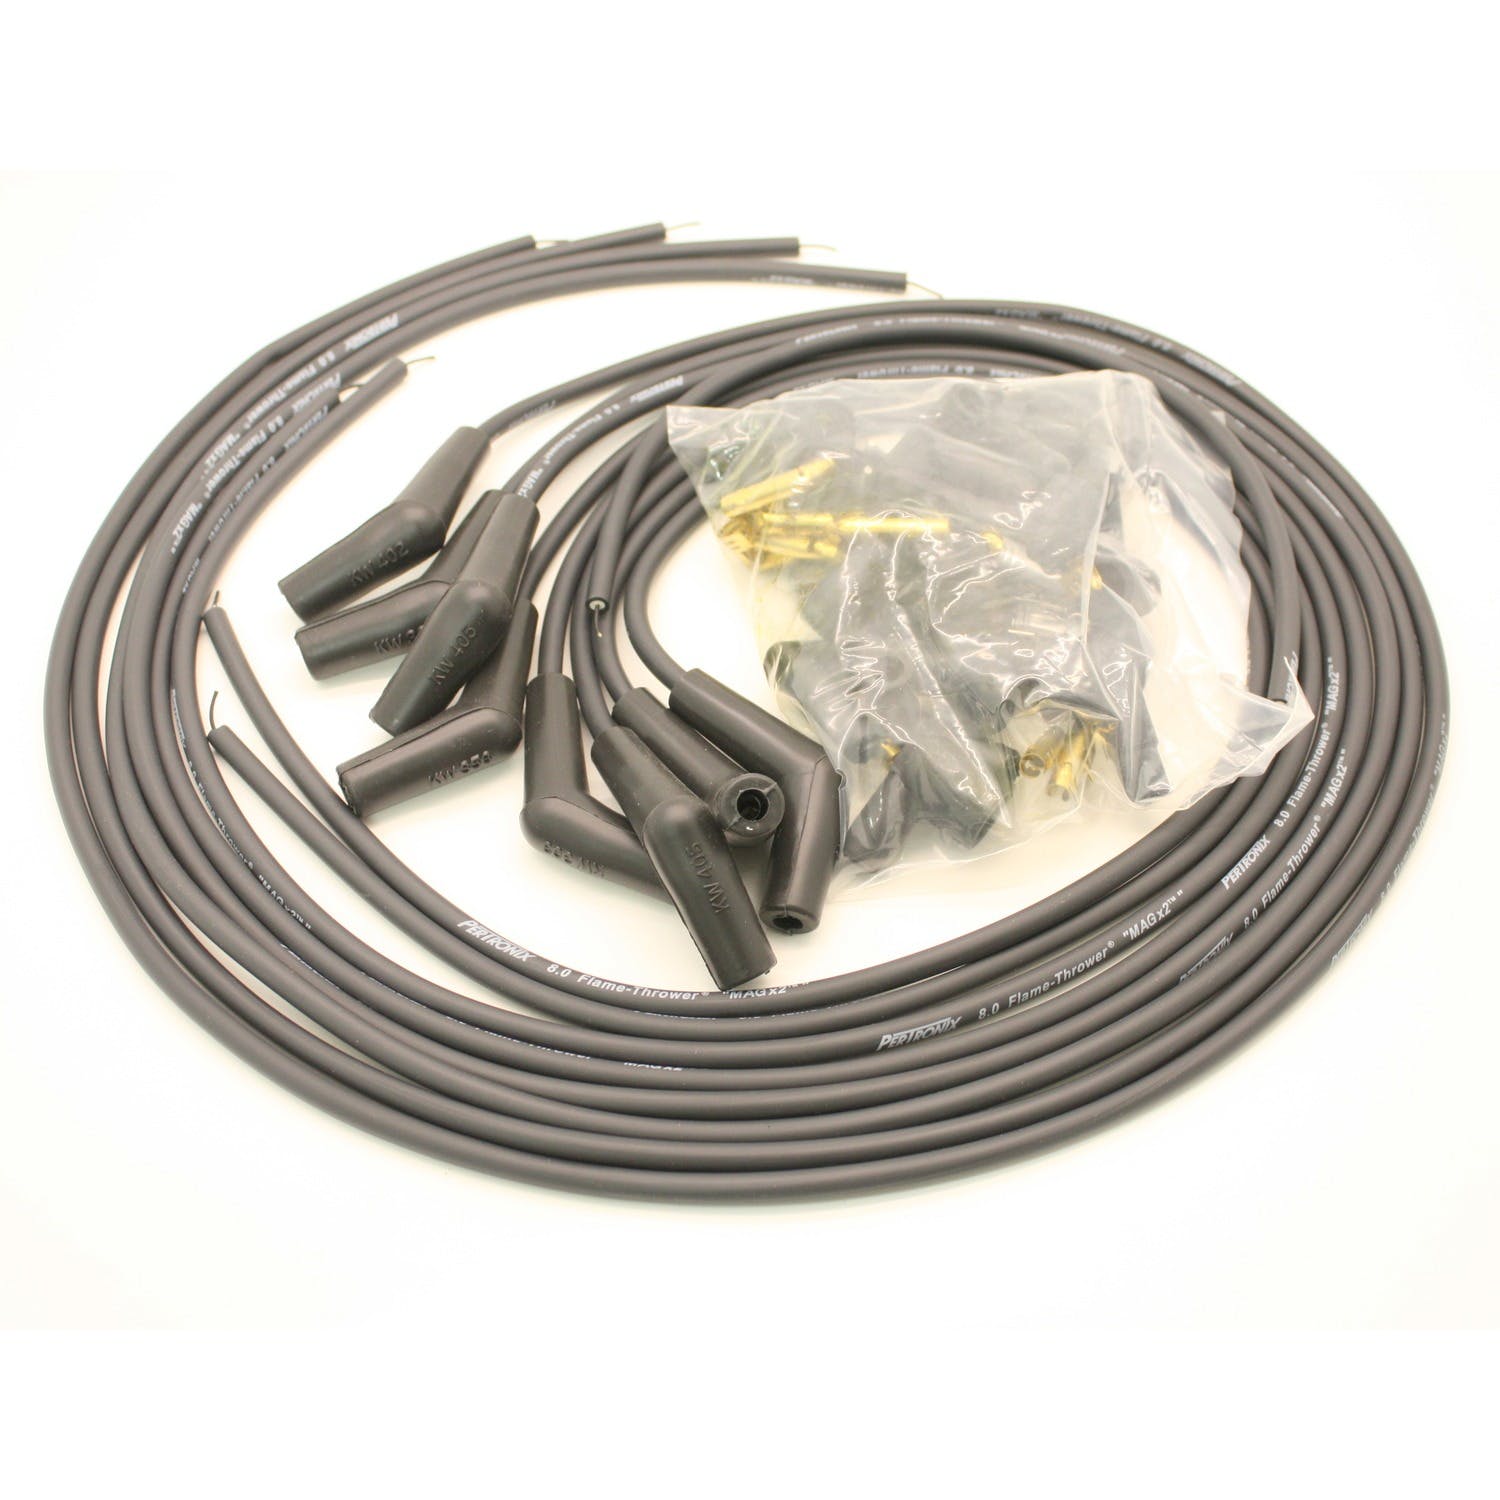 PerTronix 808215 PerTronix 808215 Spark Plug Wire Set